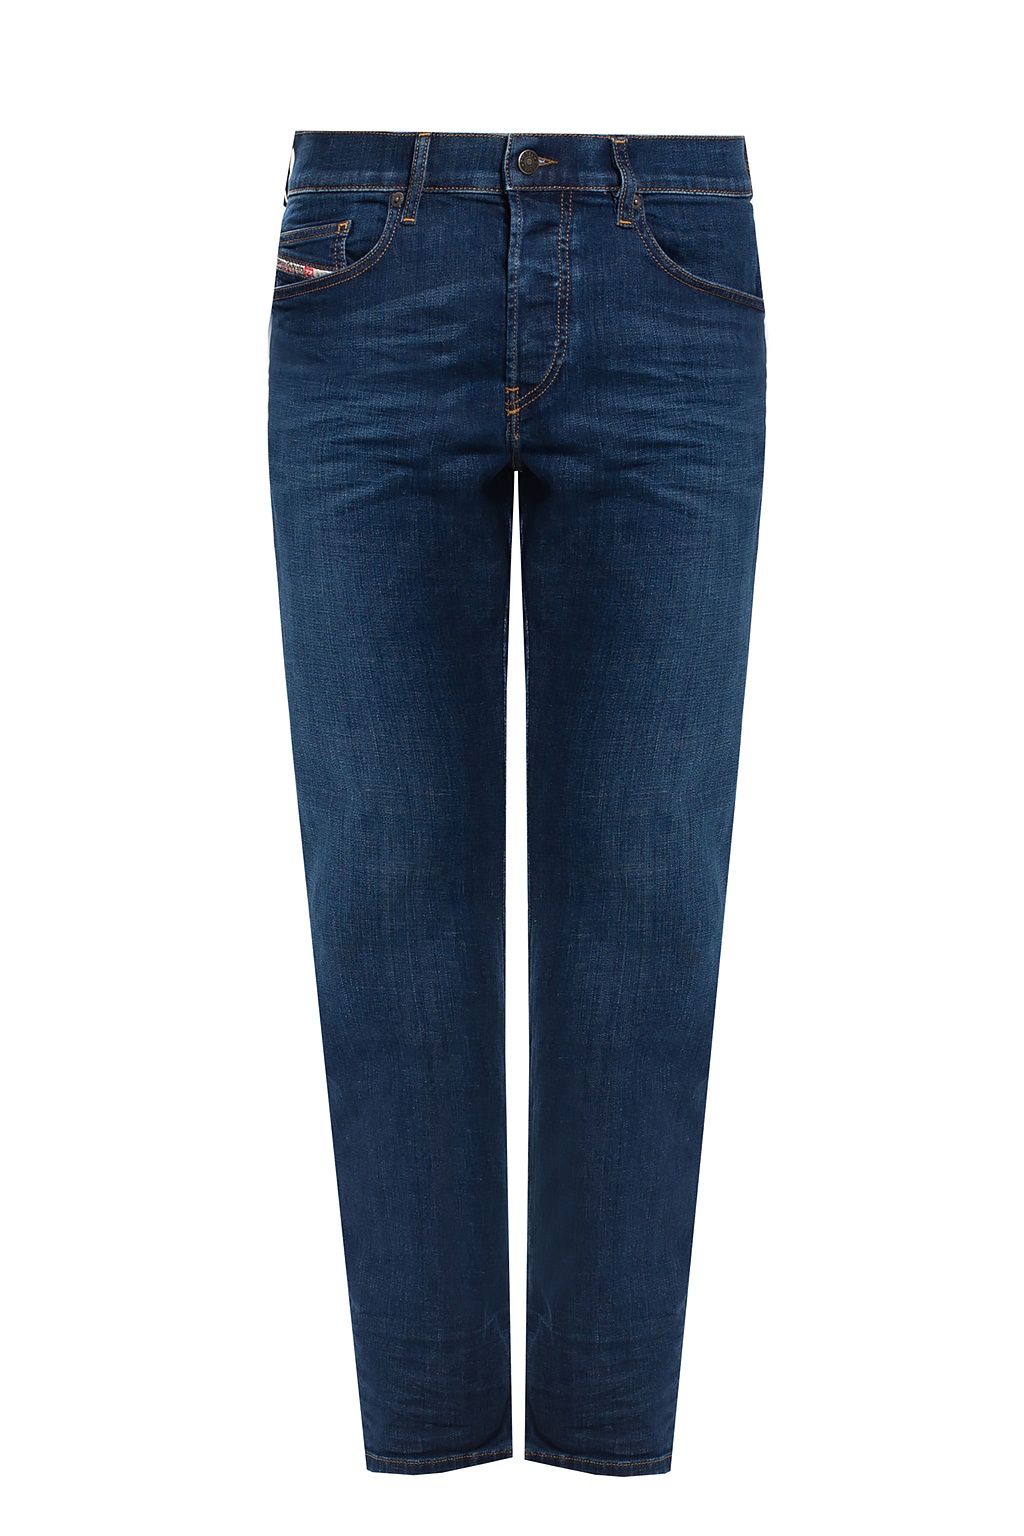 IetpShops | Diesel jeans Men\'s Mihtry\' Clothing jeans \'D - pepe - | Шапка